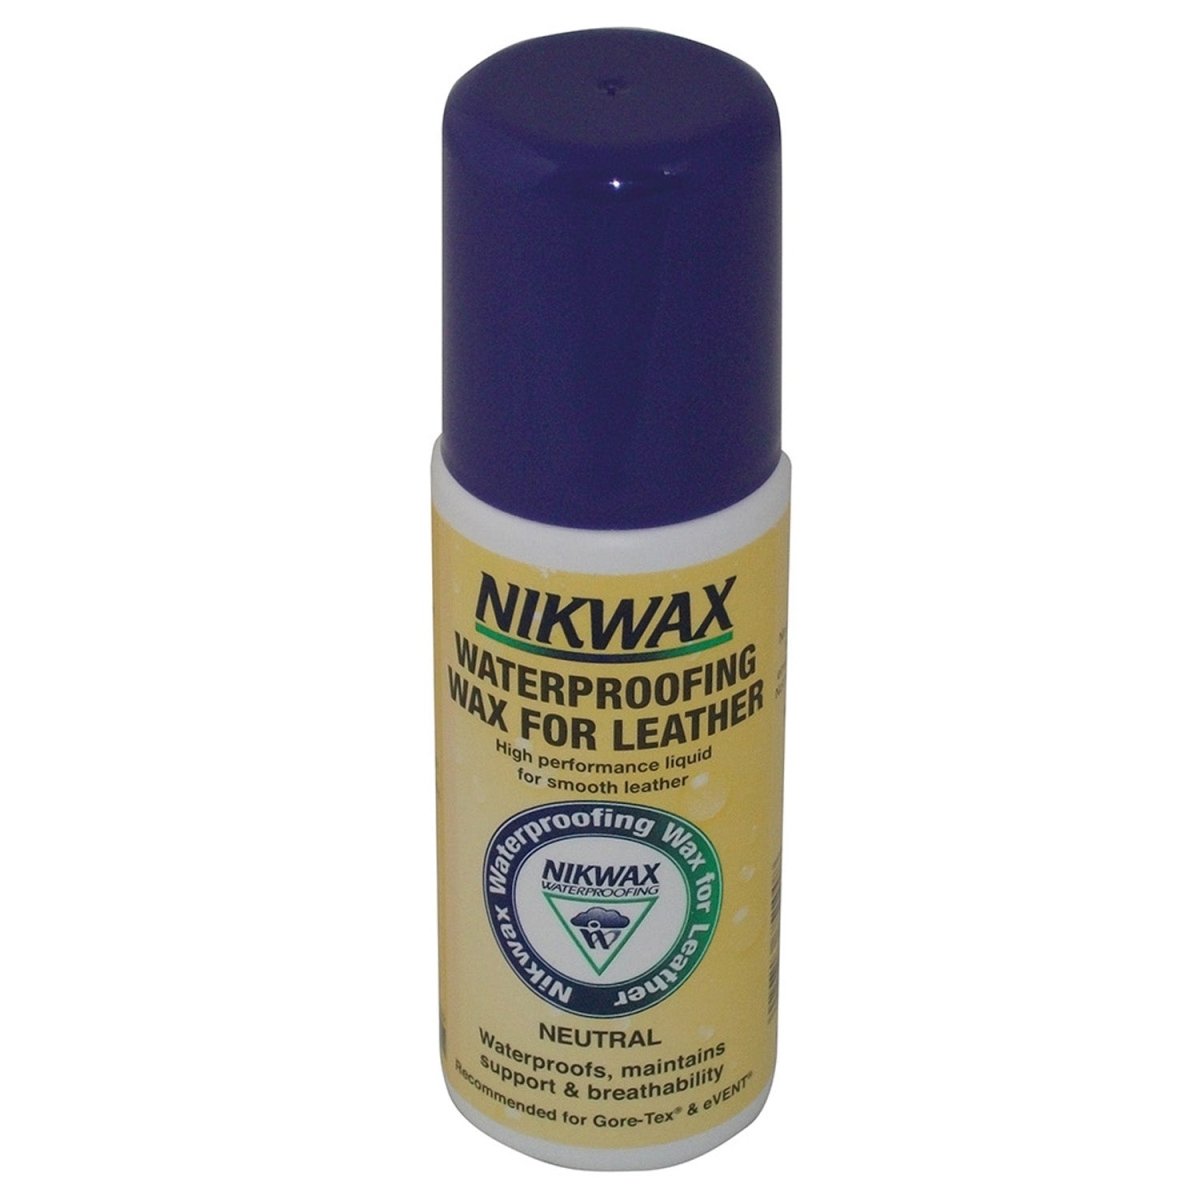 Nikwax Waterproofing Wax For Leather Liquid - Neutral - 125Ml